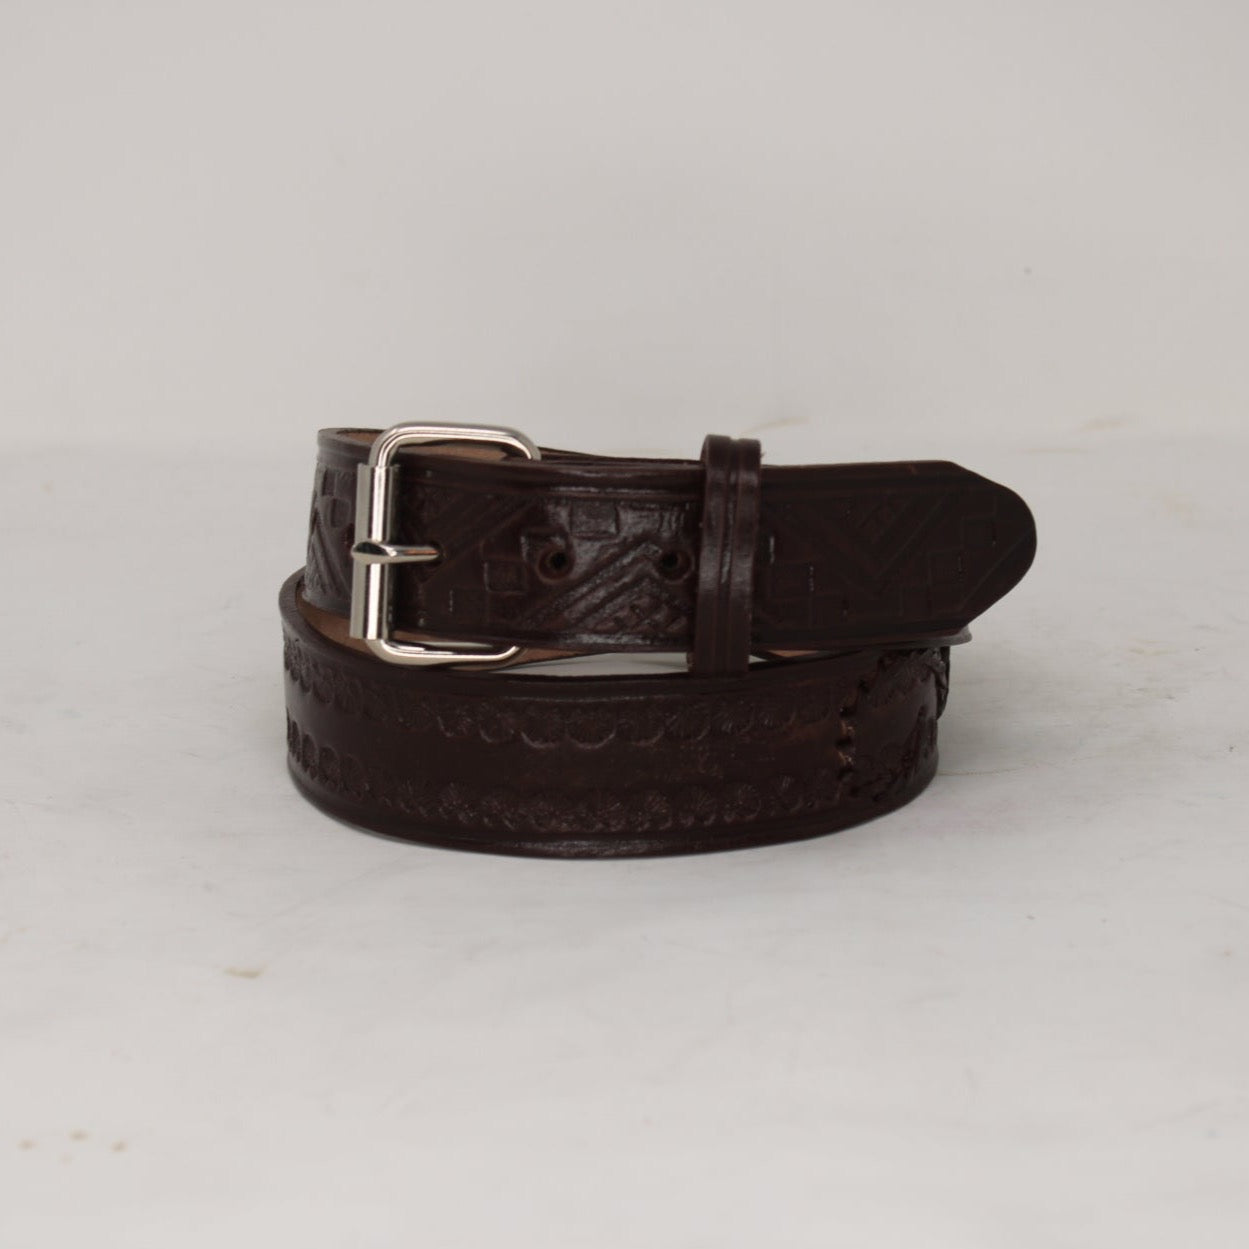 "Mustache" Leather Belt